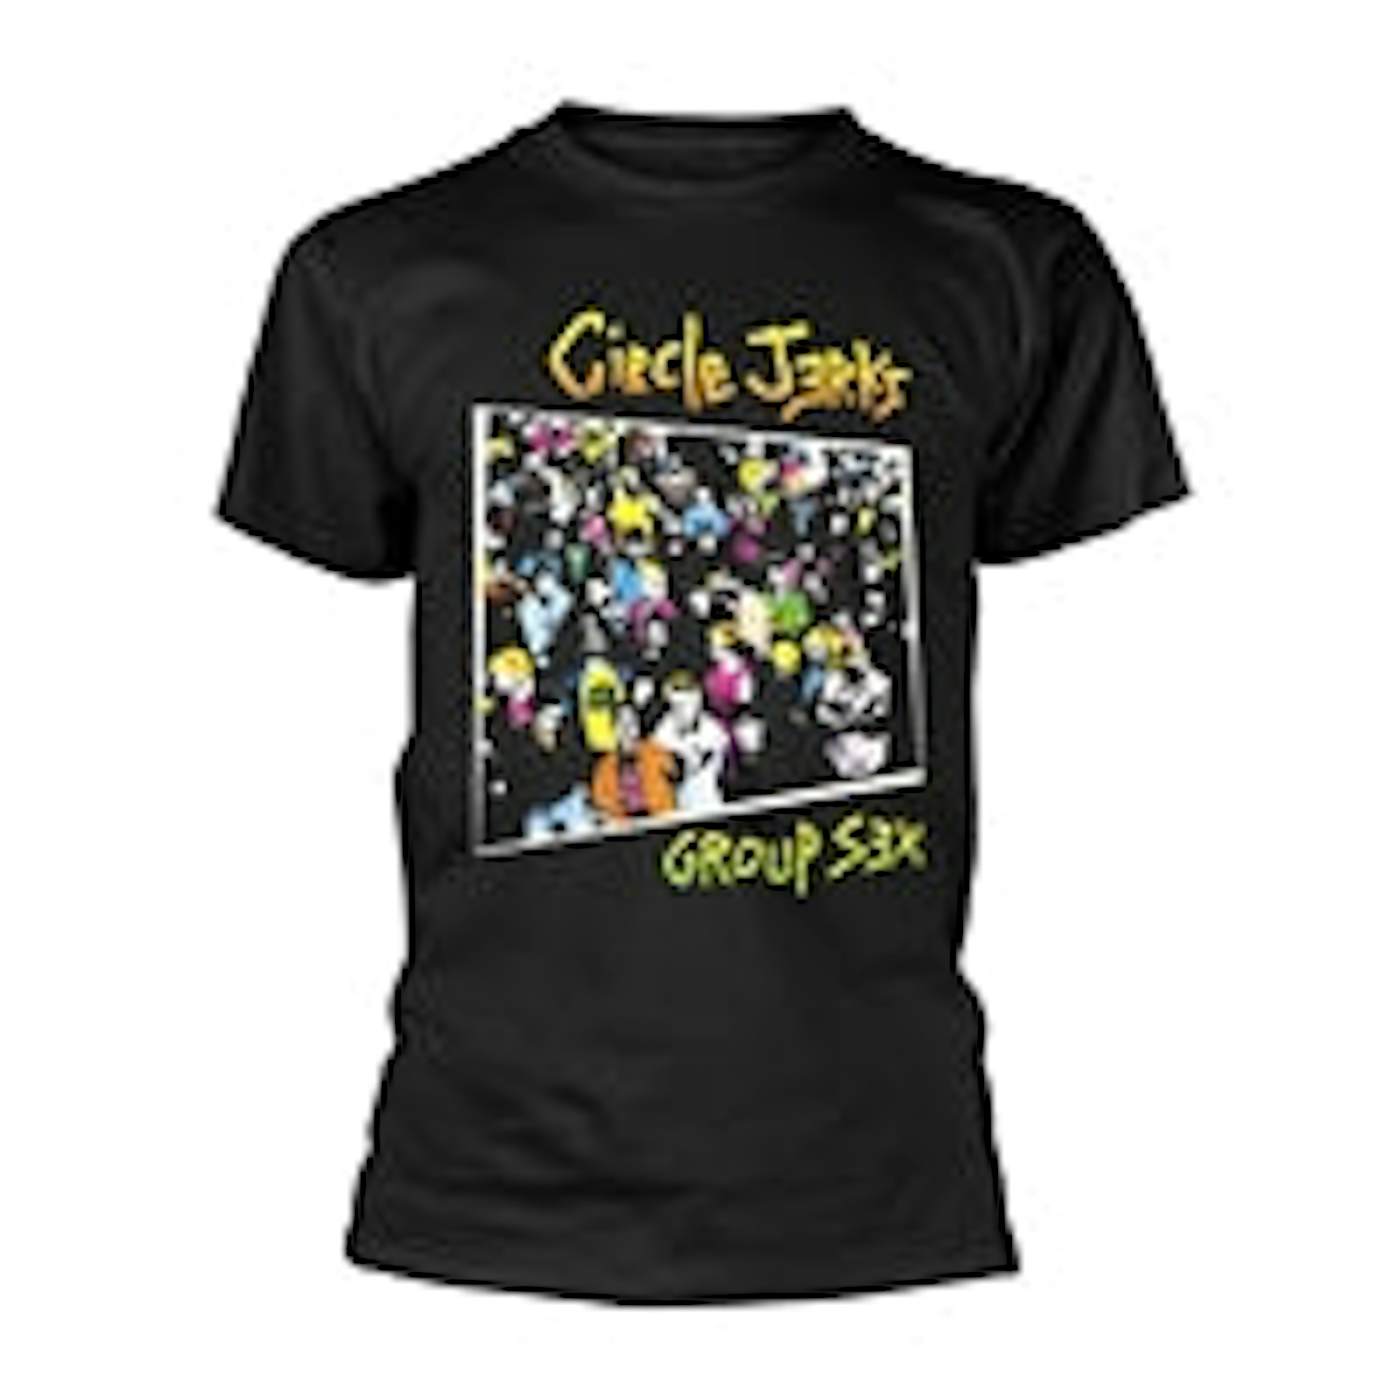 Circle Jerks T Shirt - Group Sex